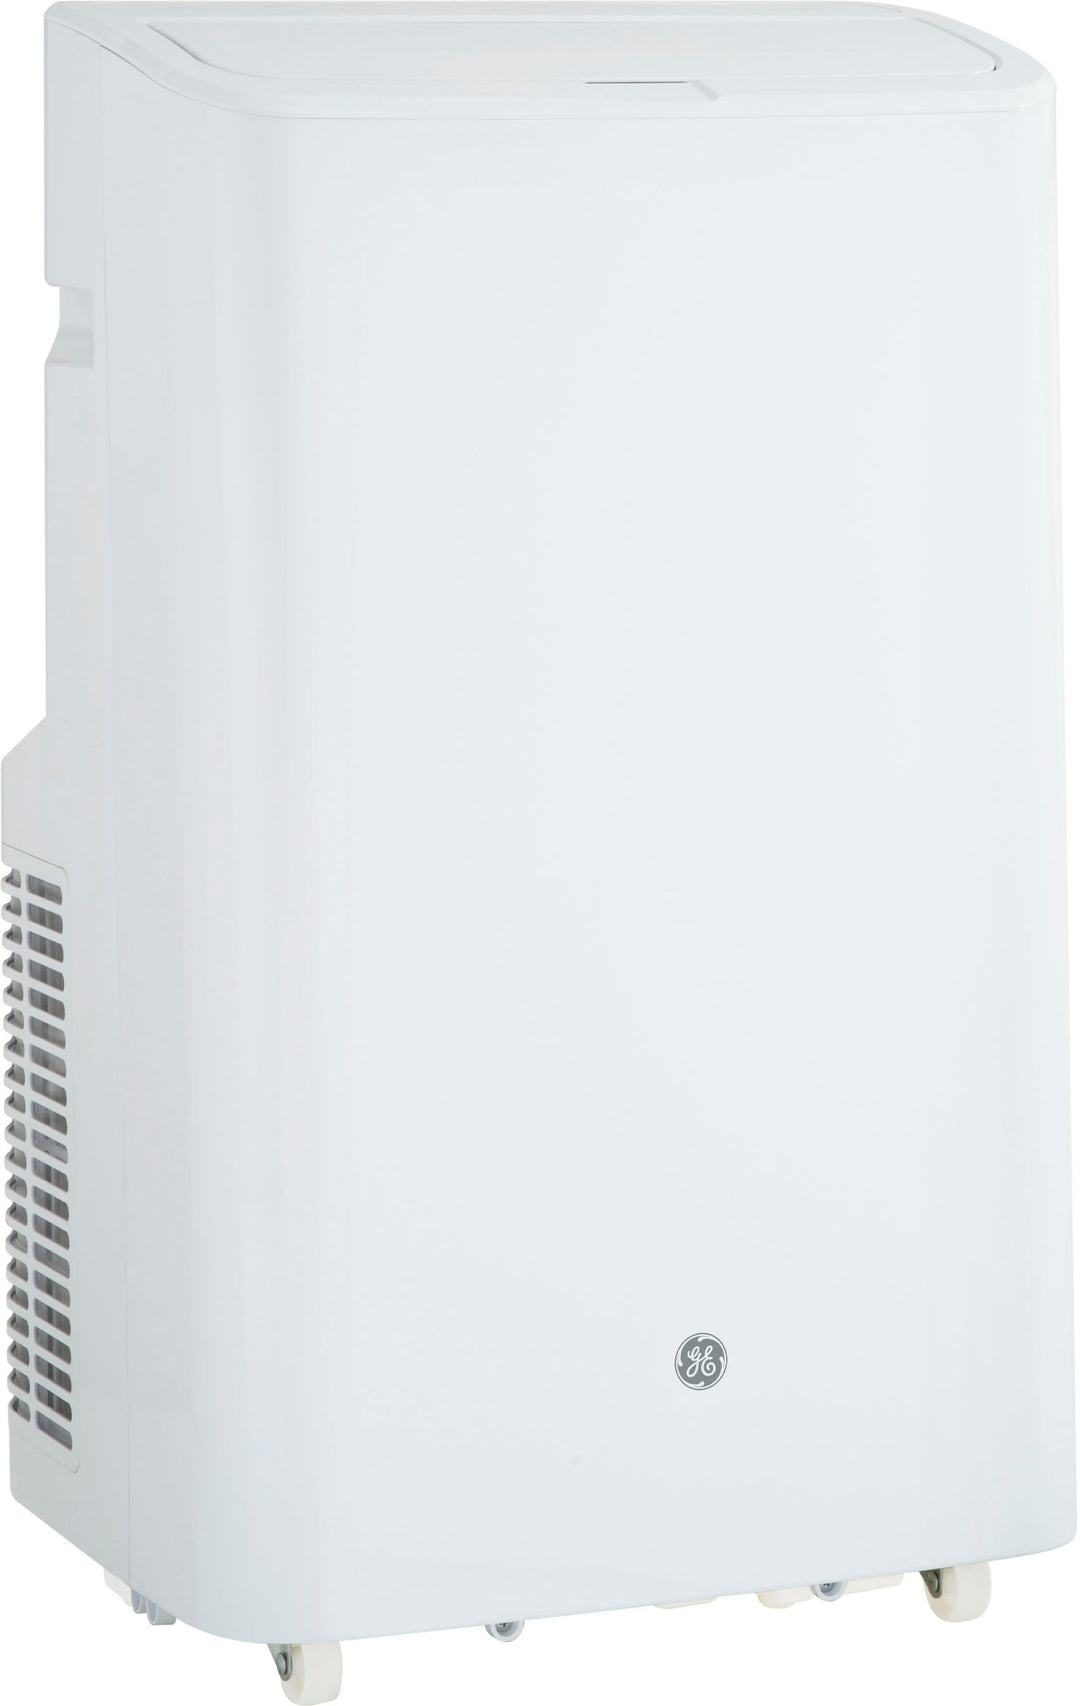 GE - 300 Sq. Ft. 7550 BTU Smart Portable Air Conditioner 10 - White_0